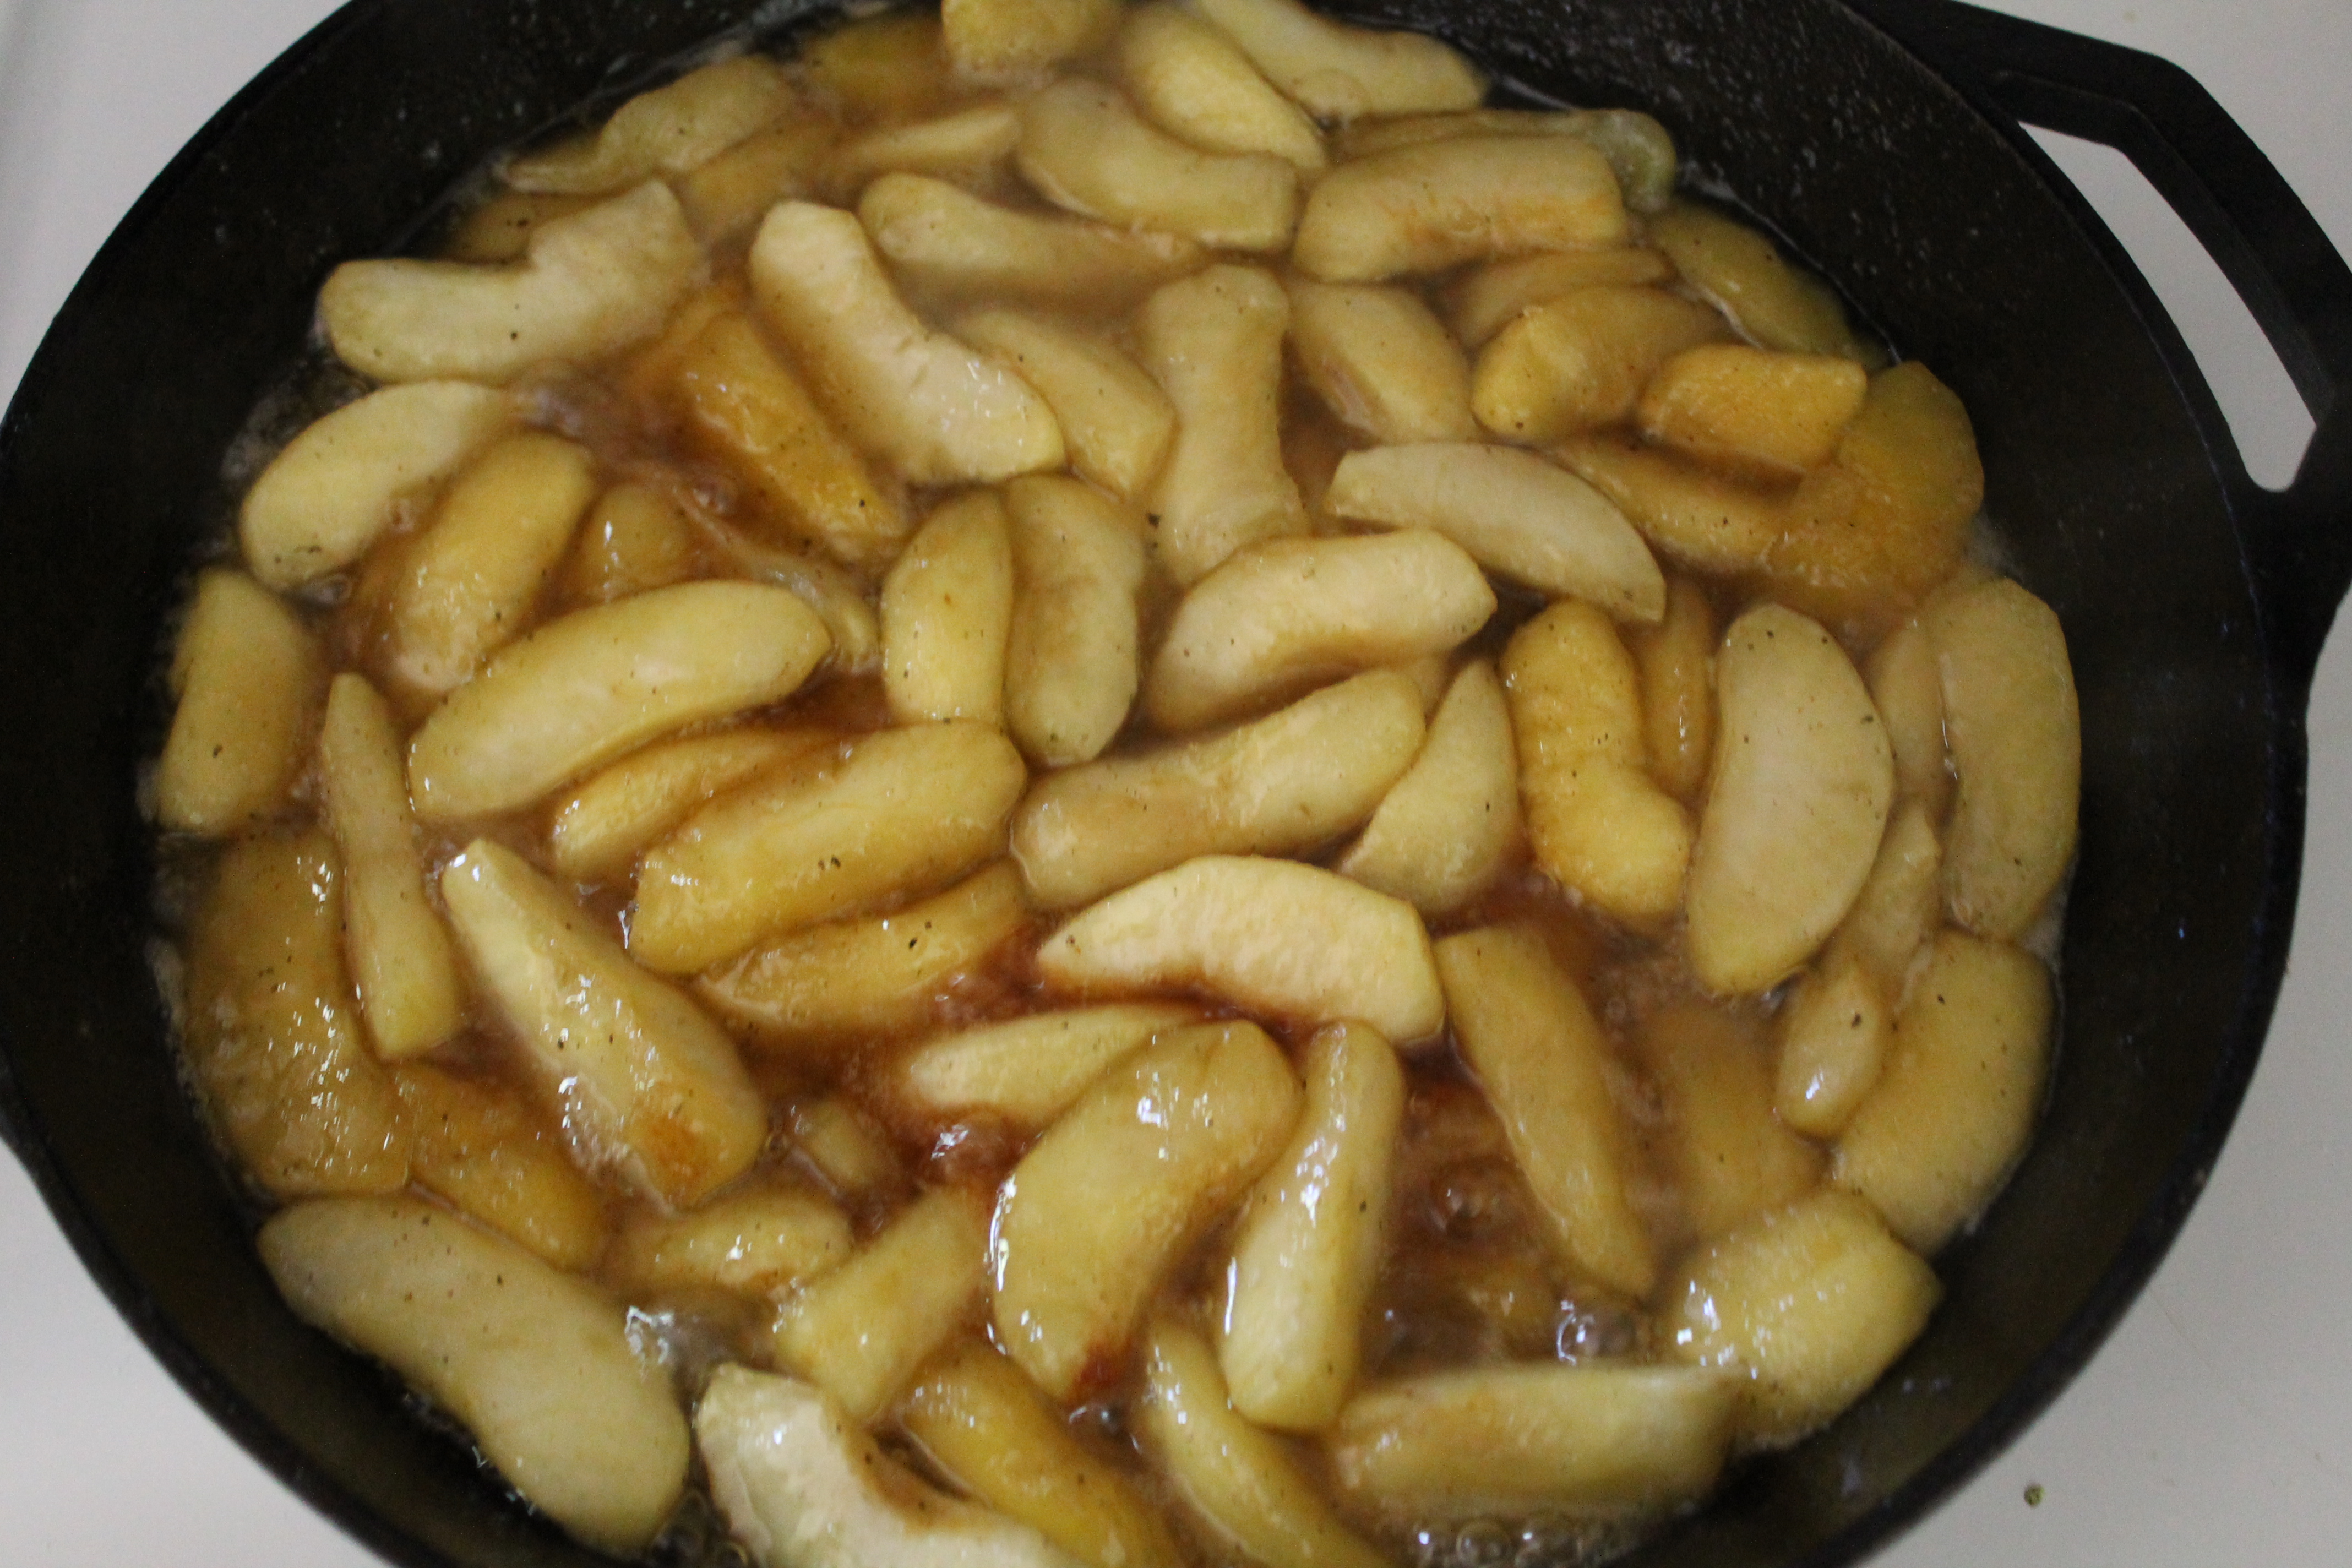 Caramelized Apples